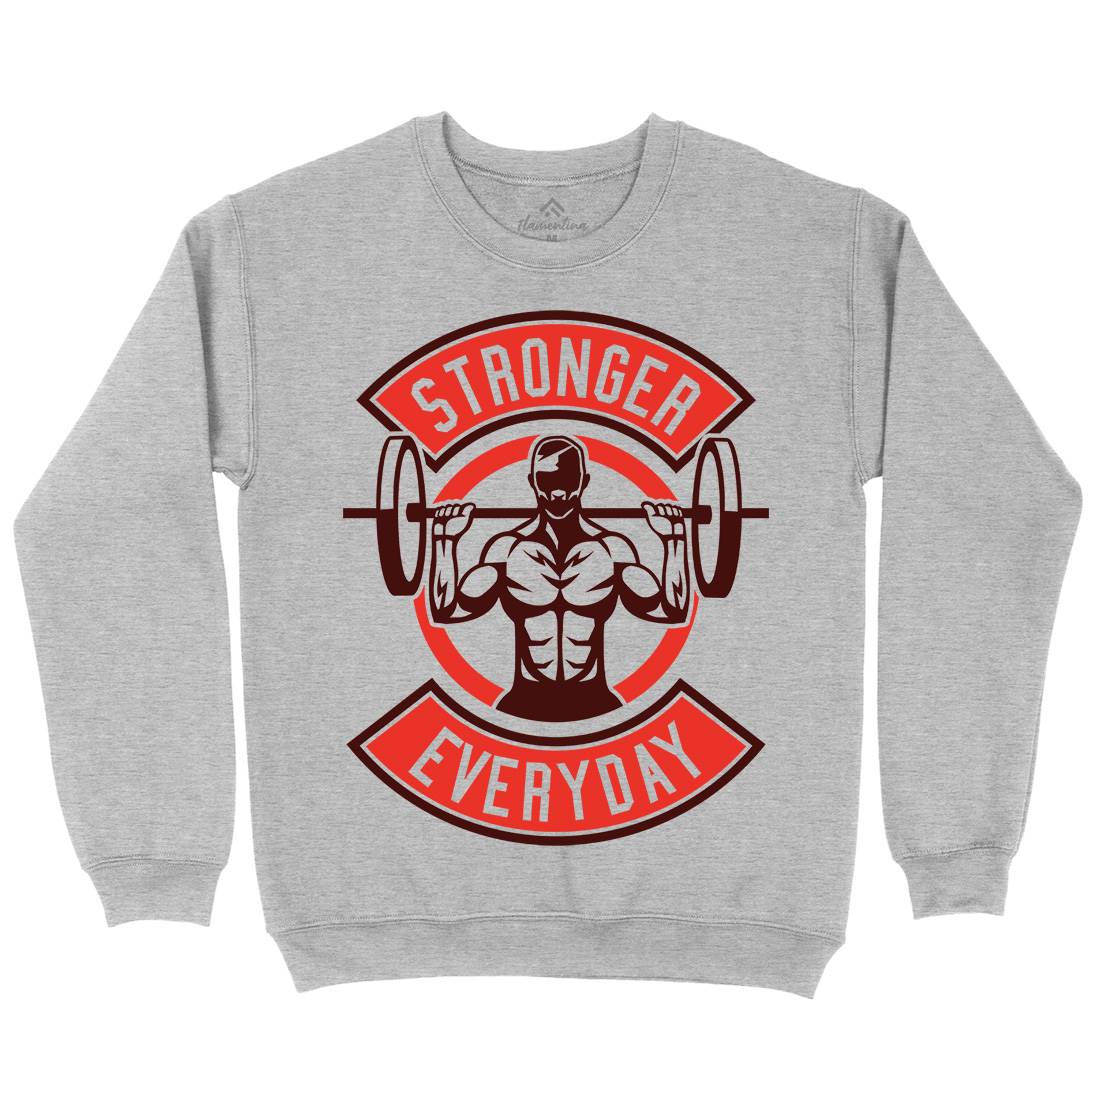 Stronger Everyday Kids Crew Neck Sweatshirt Gym A289